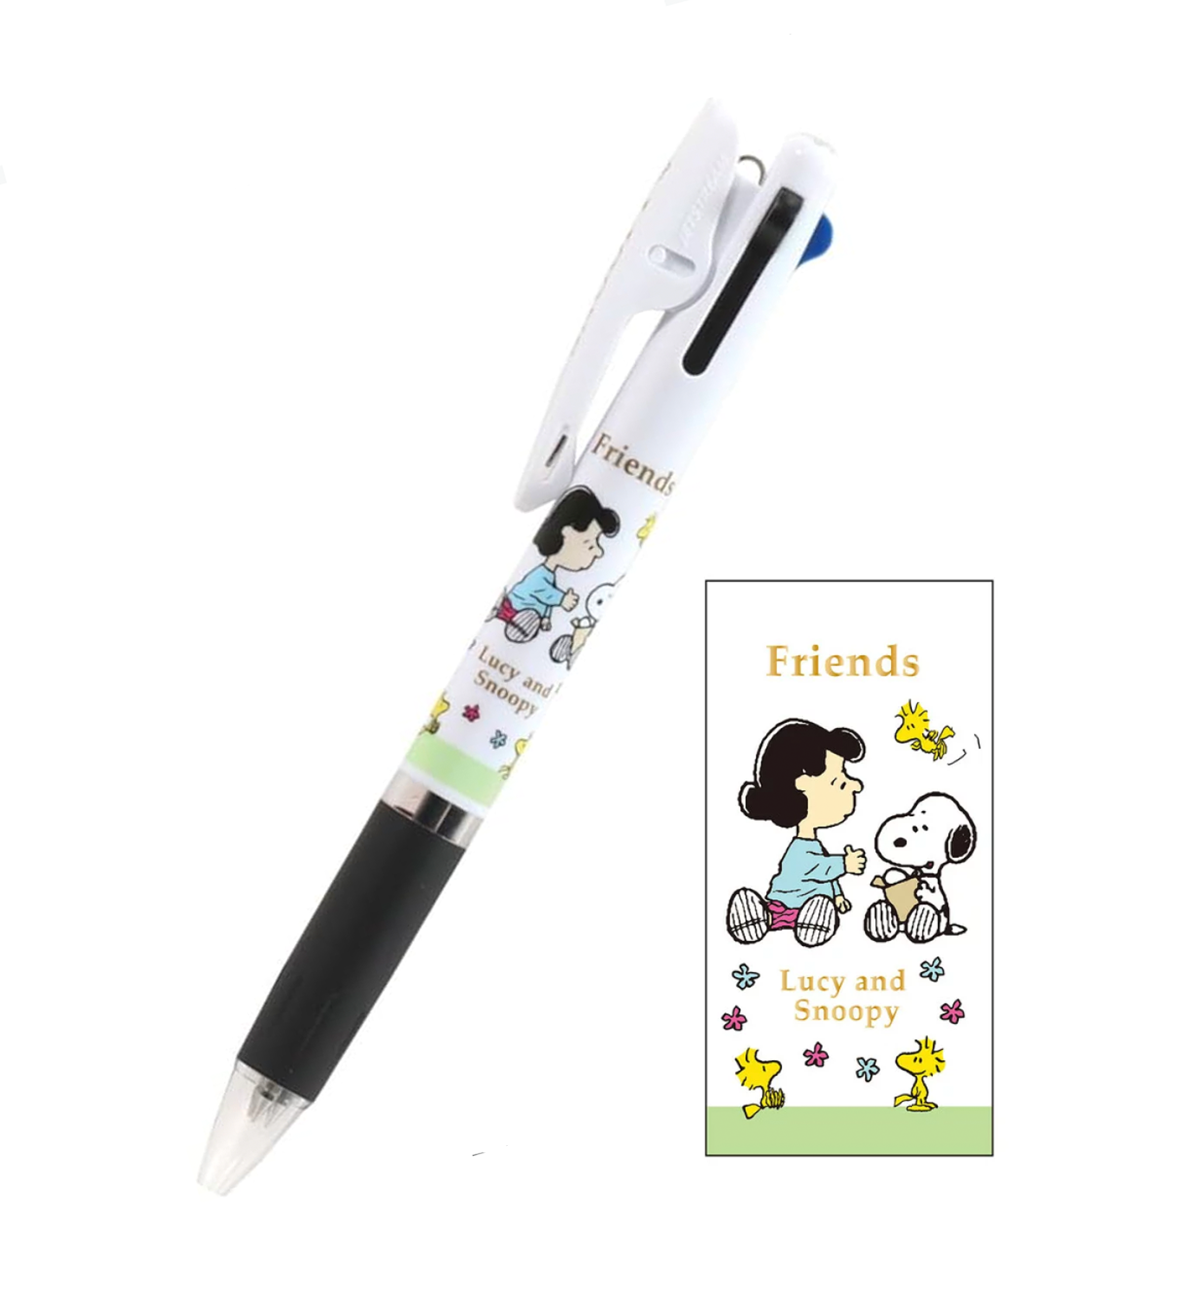 Peanuts Snoopy Jetstream 0.5mm Pen [Snoopy & Lucy]